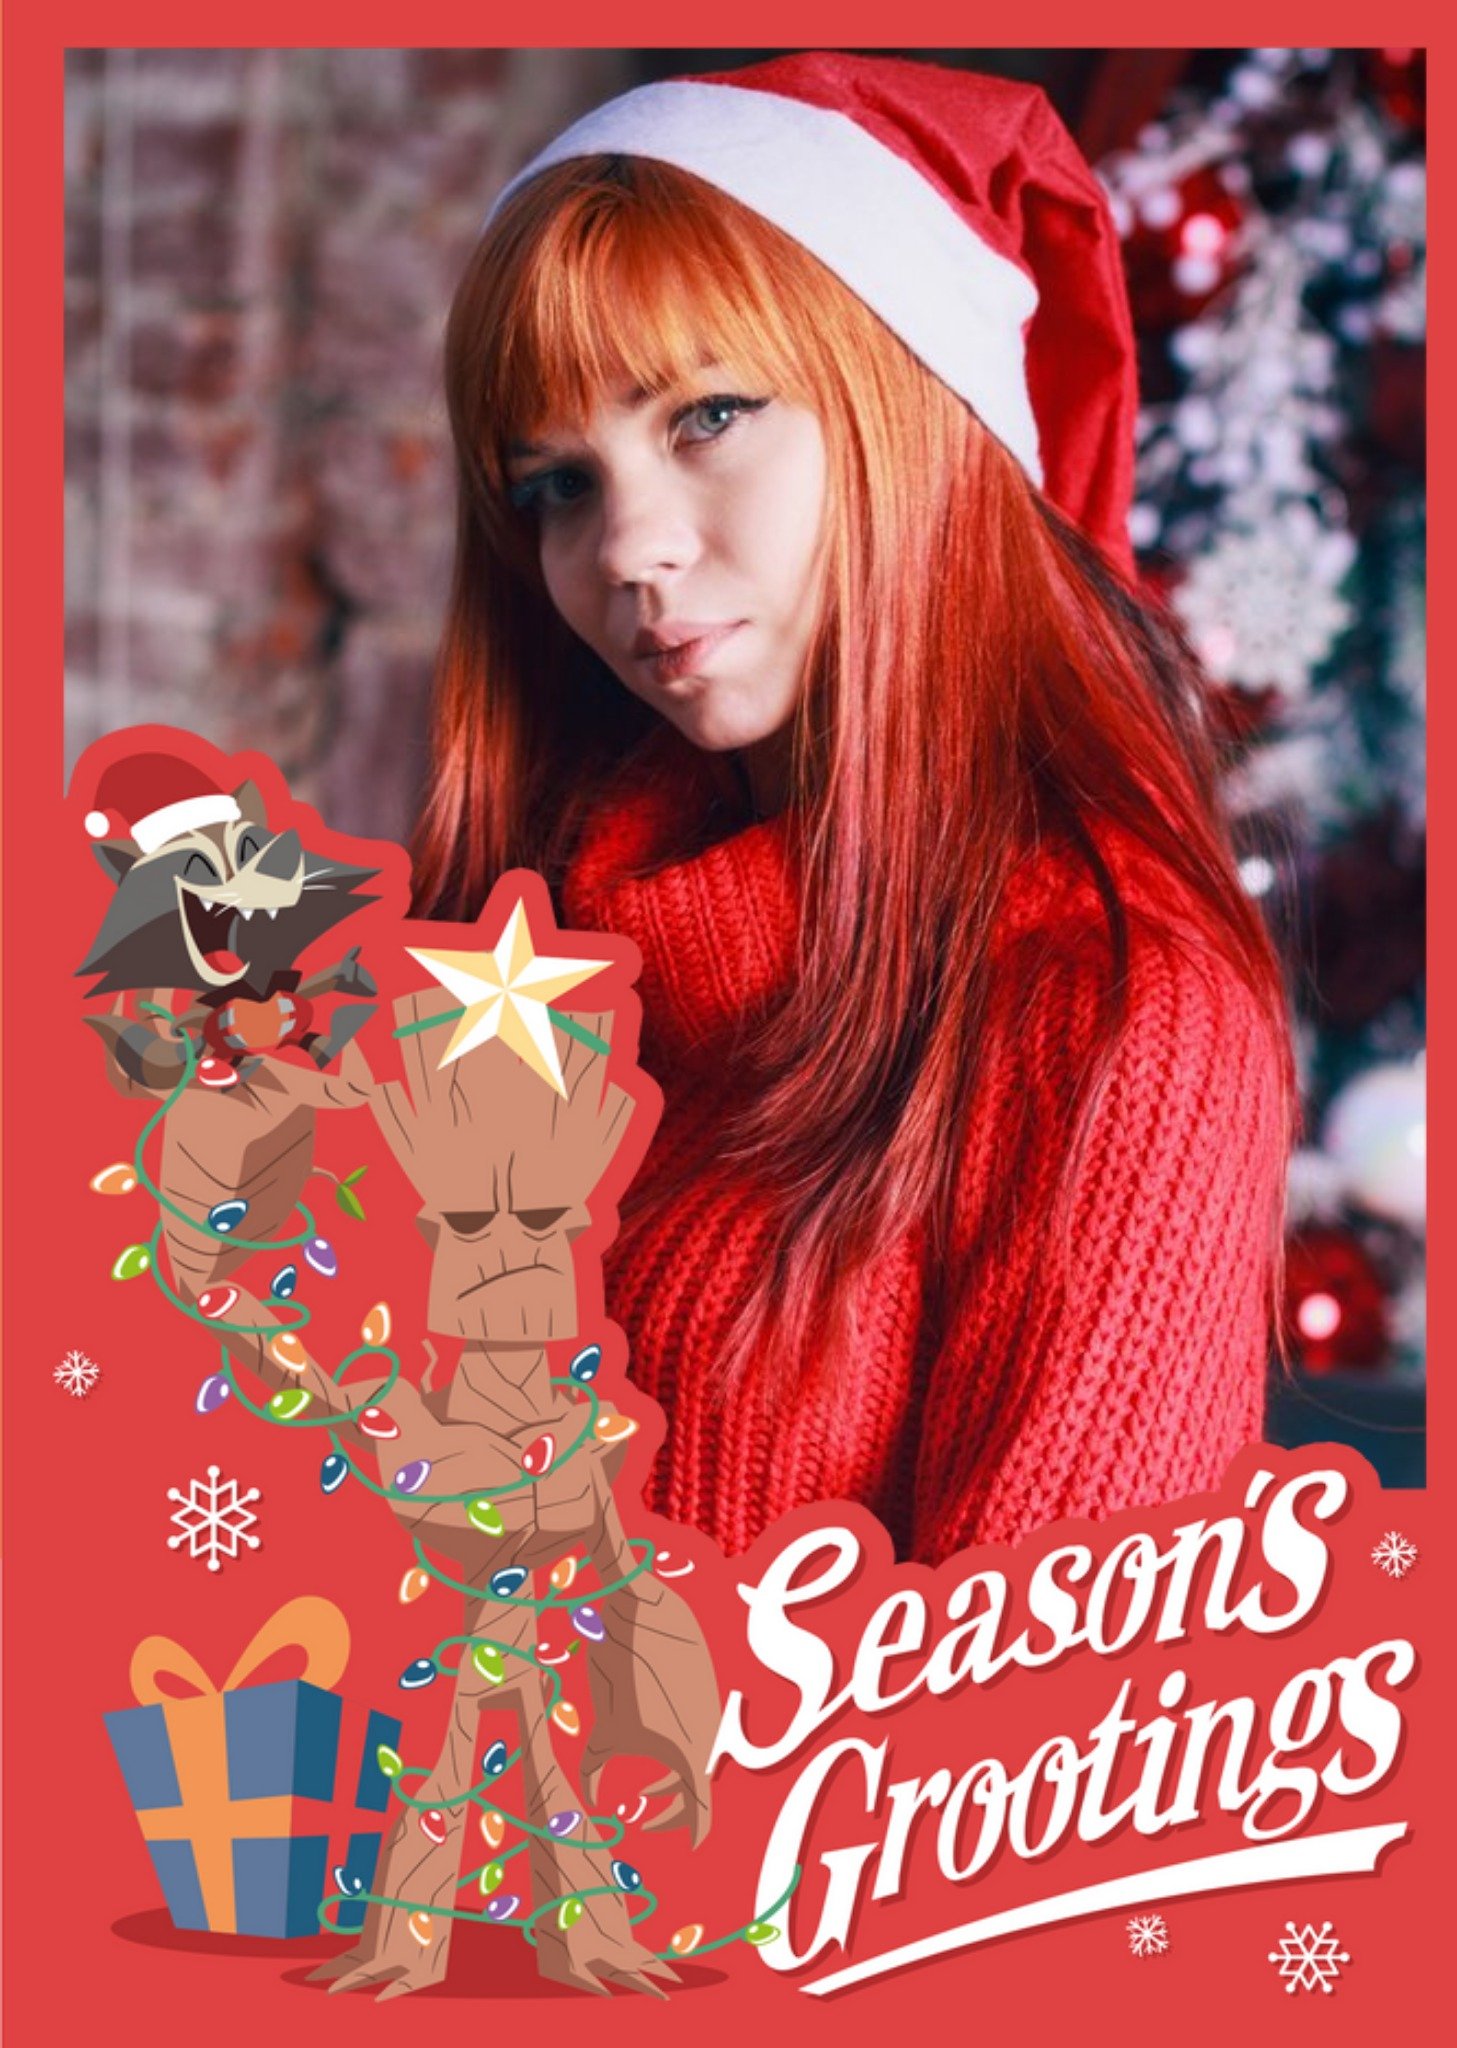 Marvel Comics Cartoon Groot And Rocket Racoon Photo Upload Christmas Card Ecard